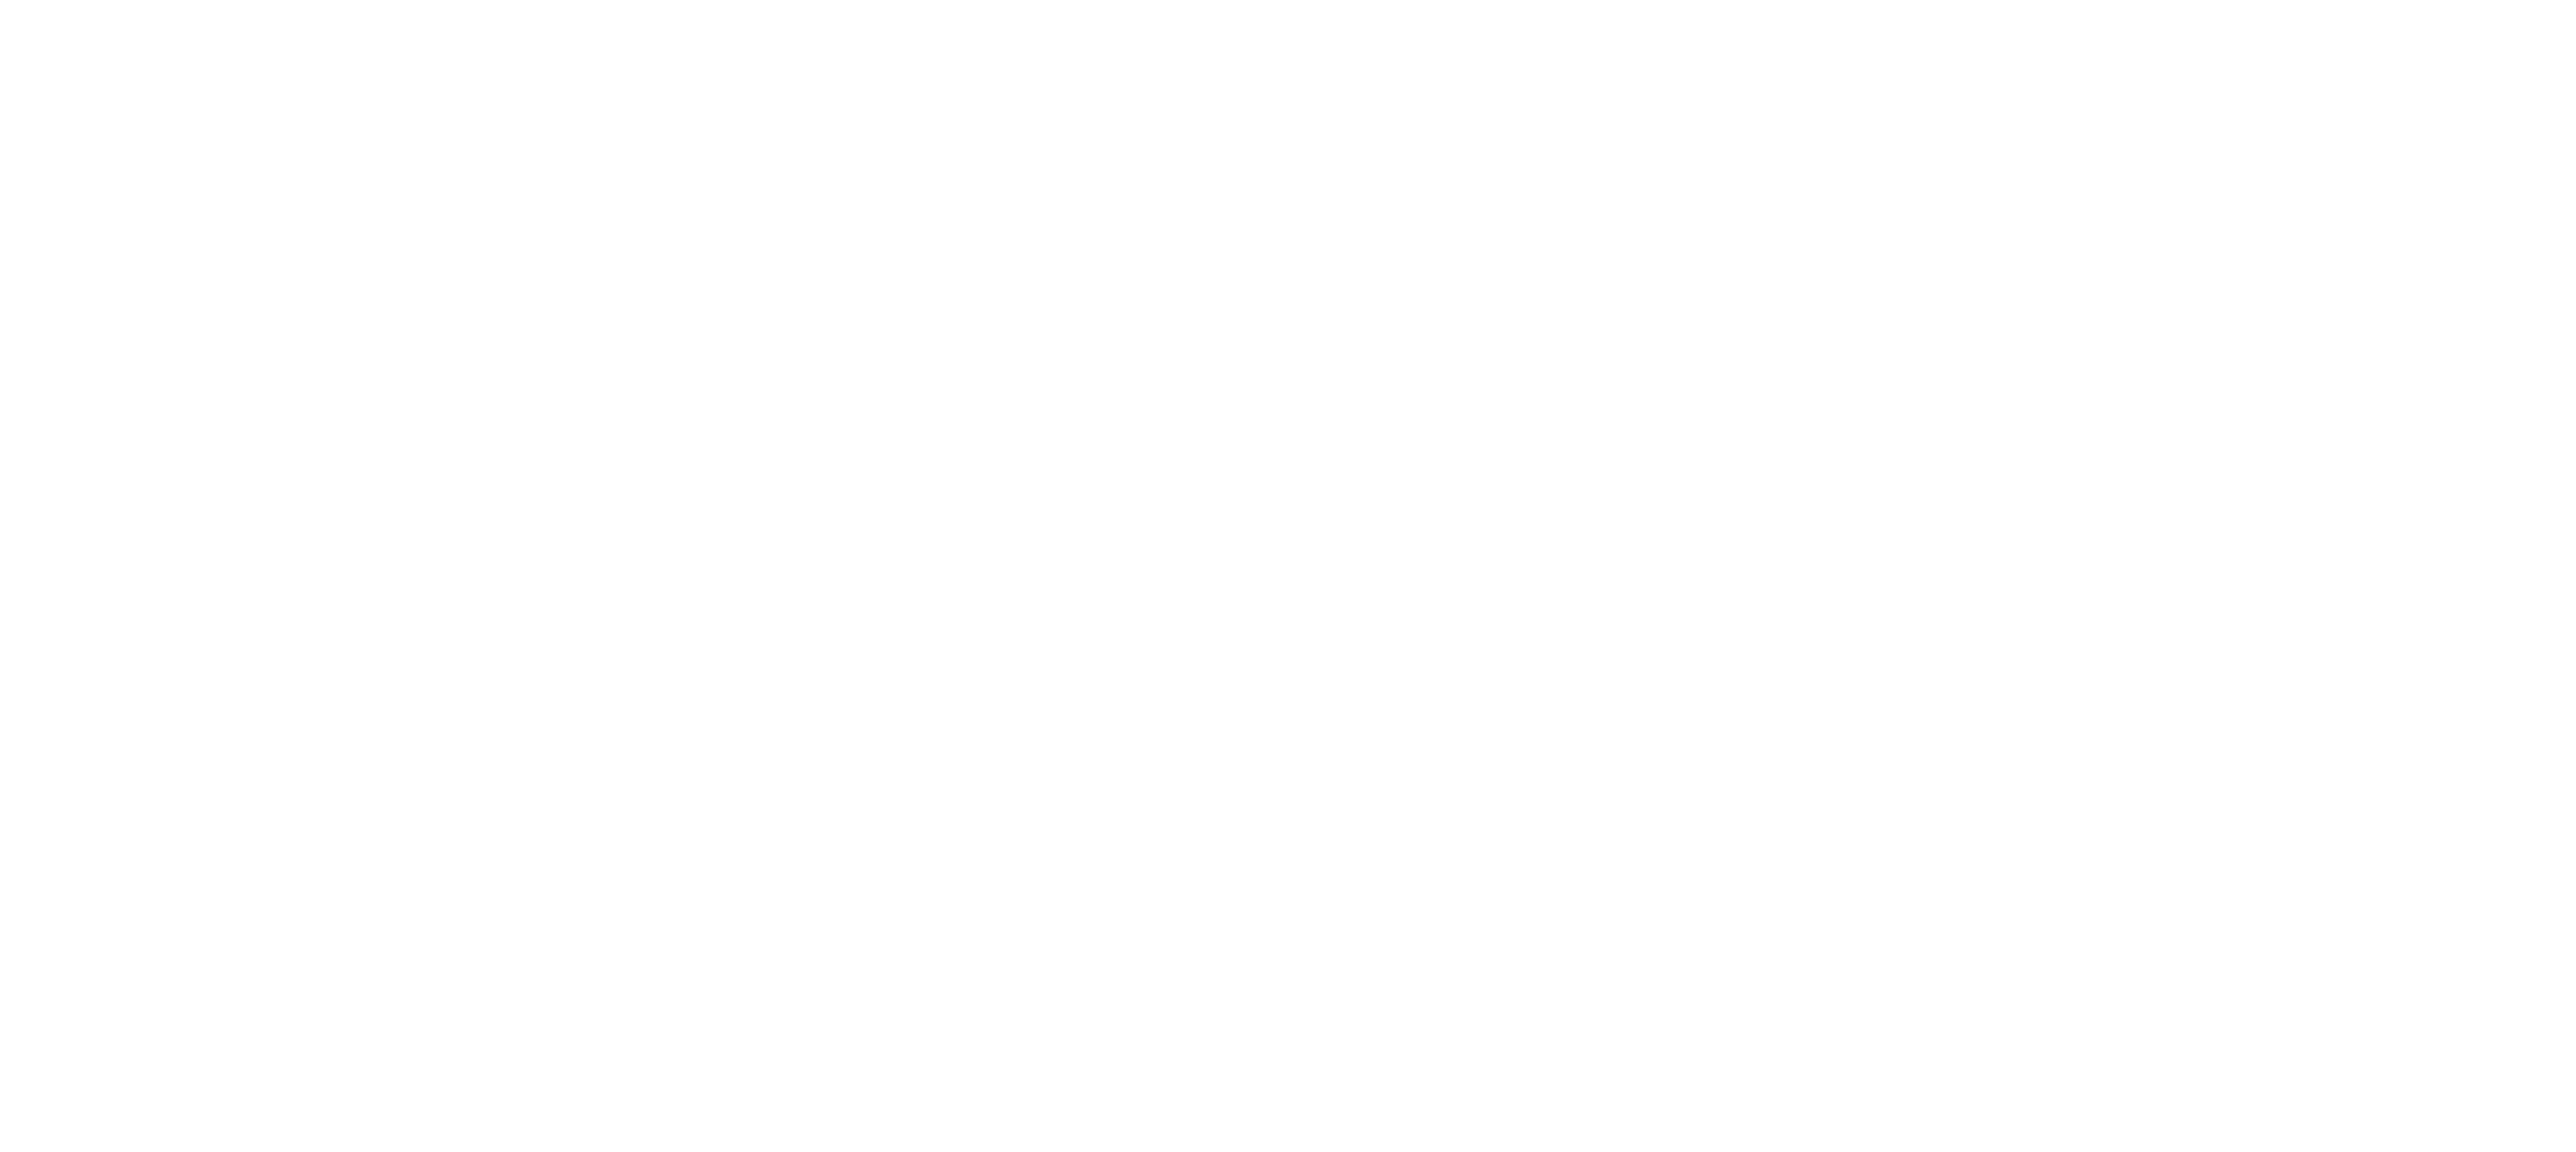 Logo-Kyte